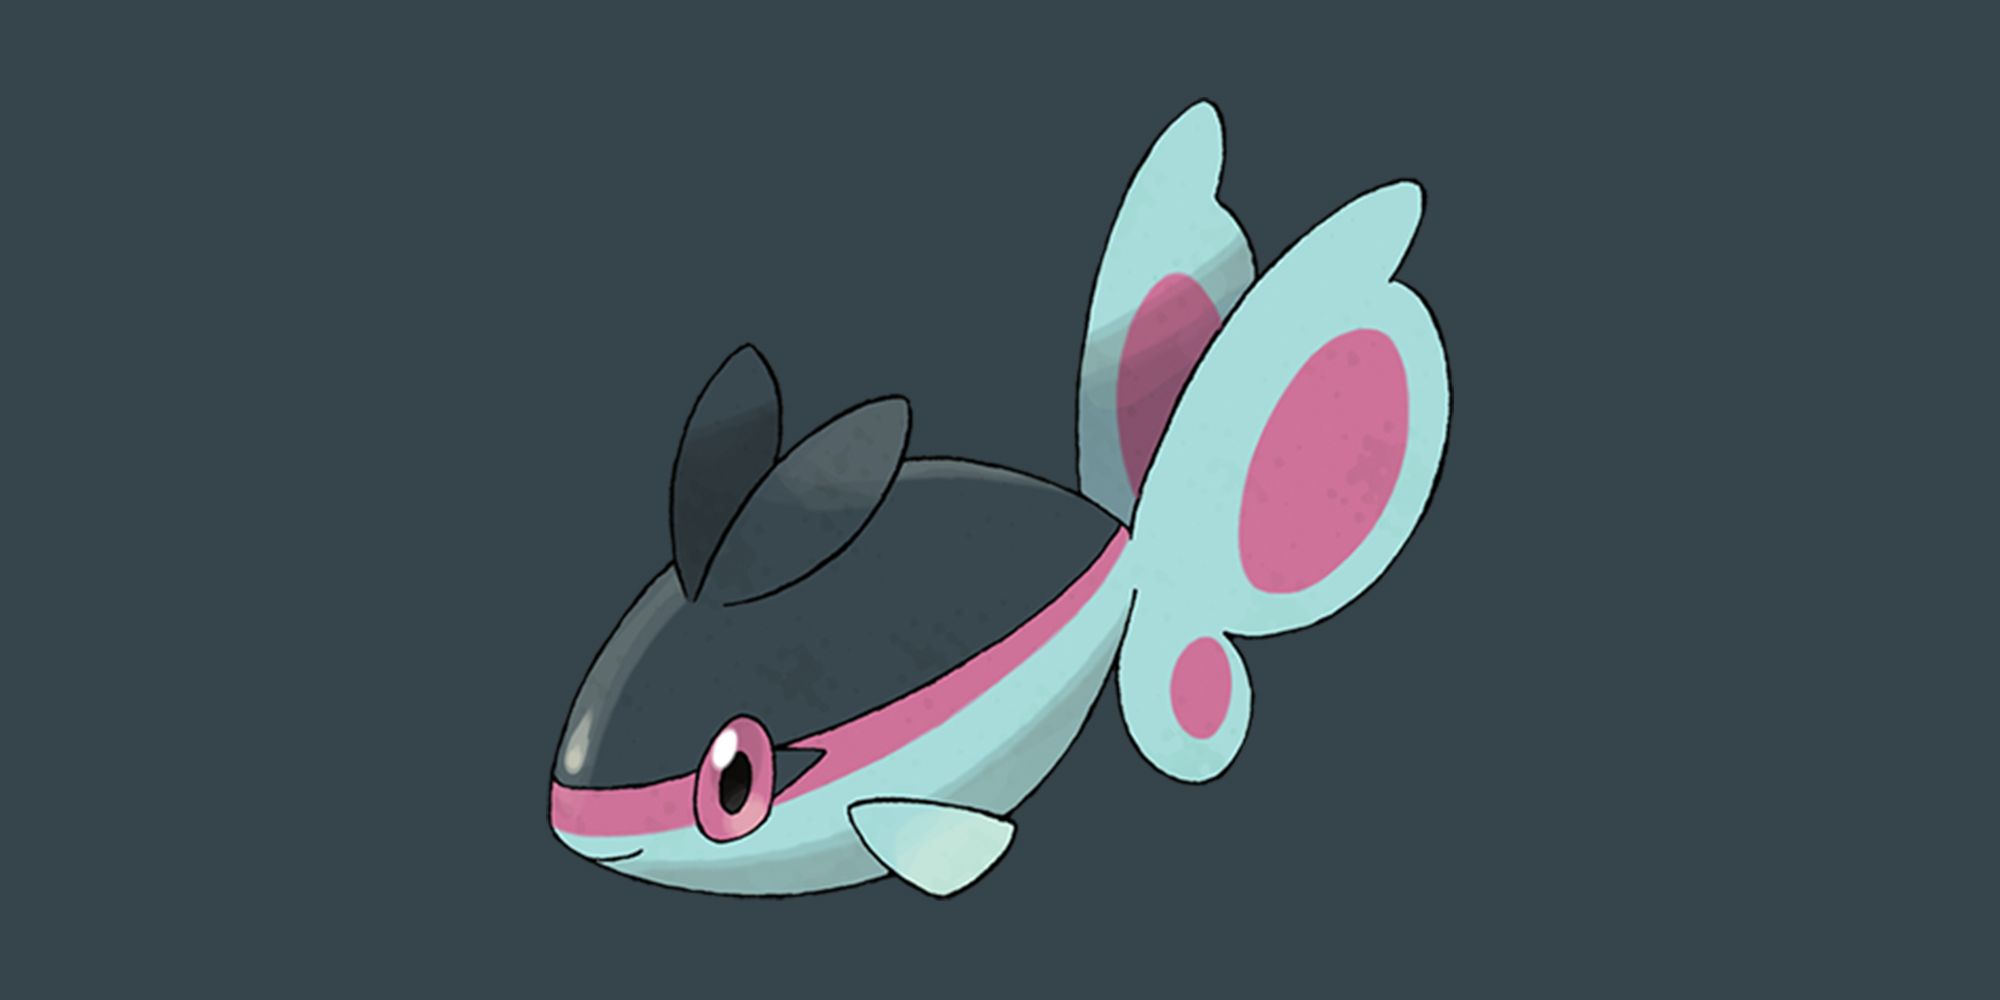 The 10 Cutest Fish Pokémon Ranked